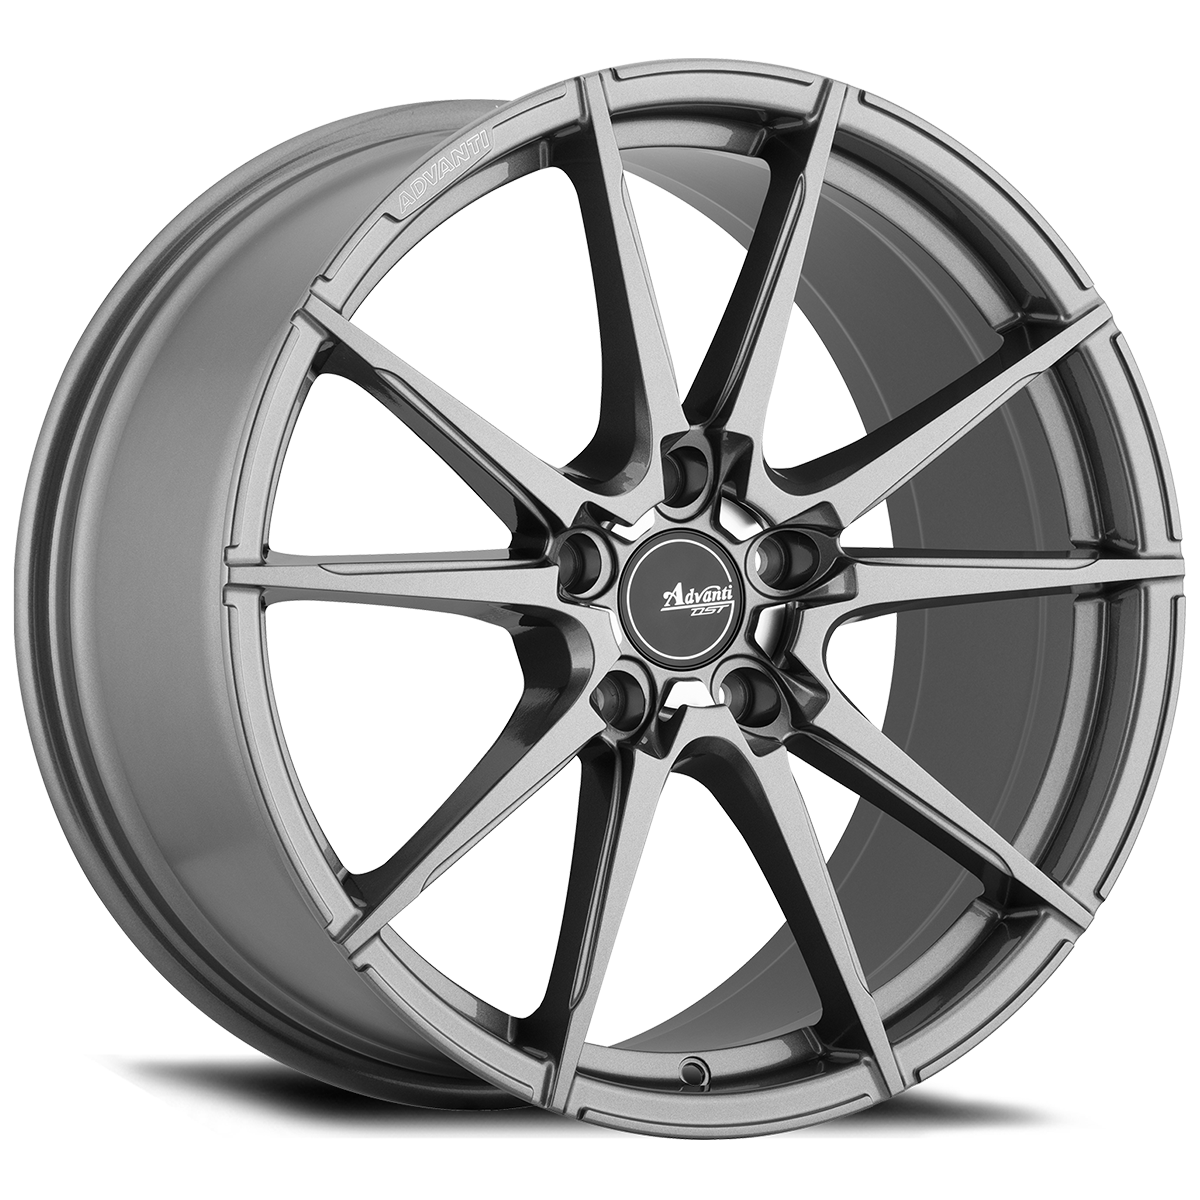 17” Advanti 5x108 Alloy wheels and tires 205/50 17 set of 4 - Car